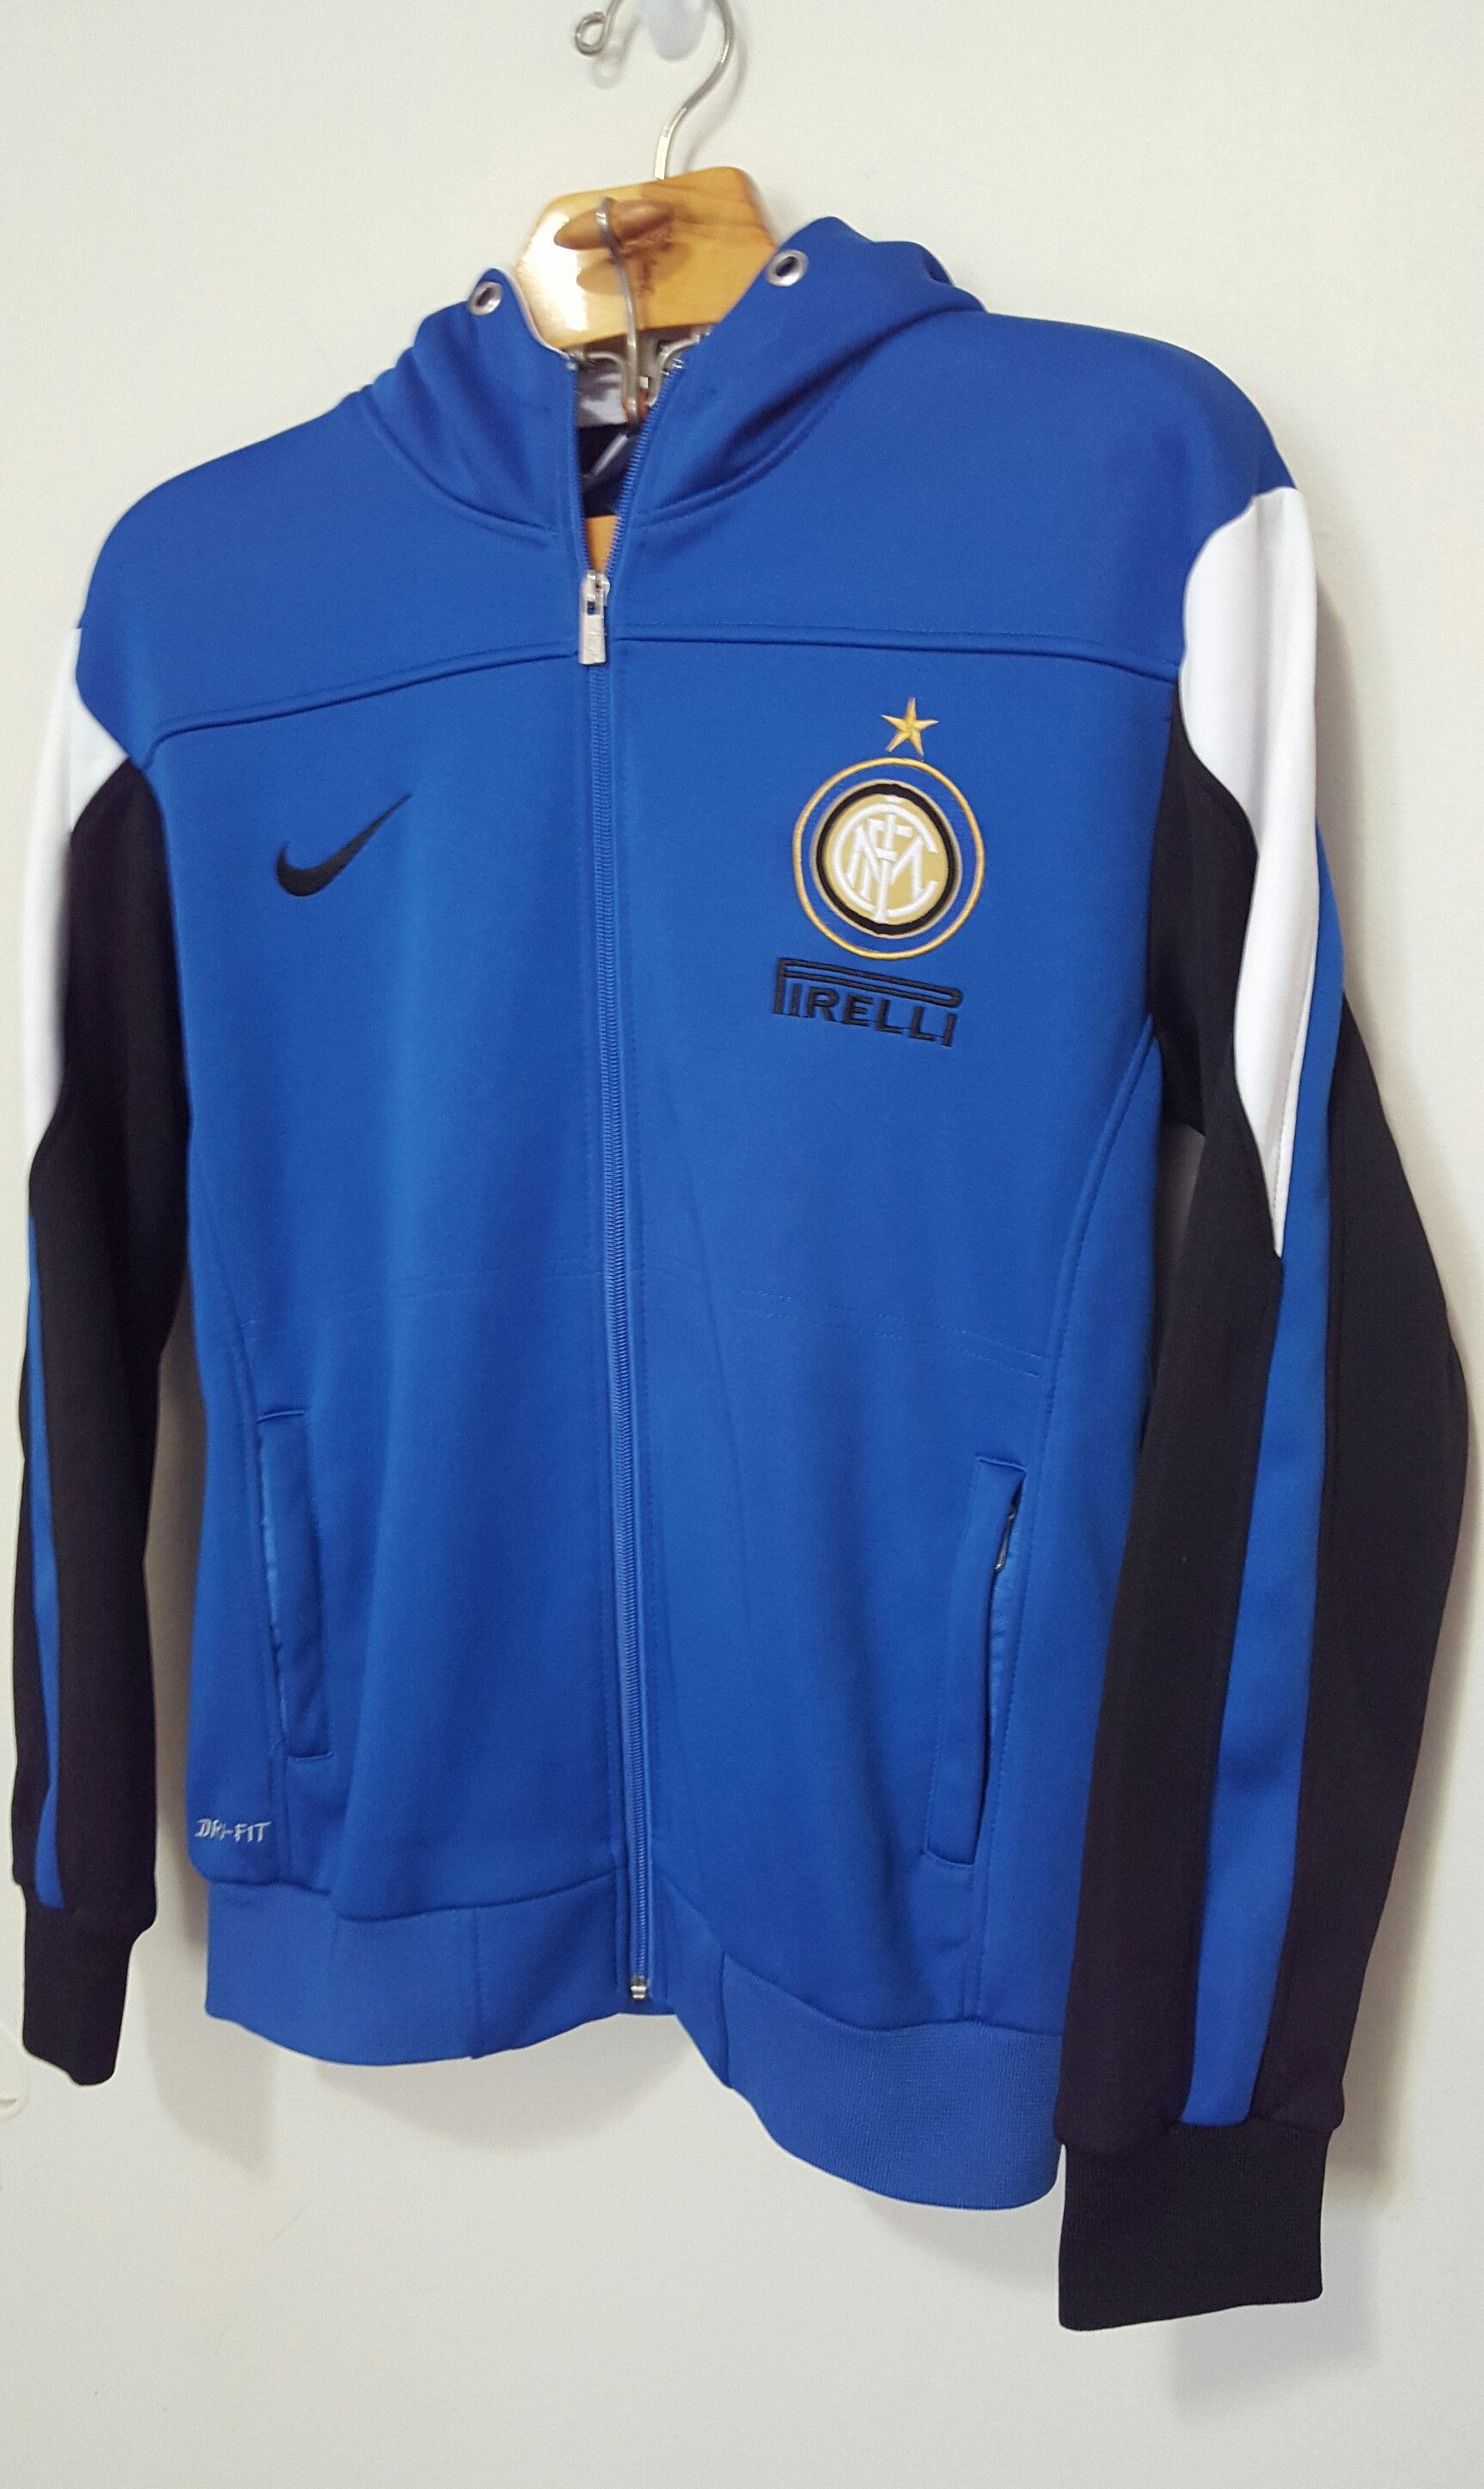 Nike Nike Inter Milan Football Club Pirelli Soccer Hoodie Size US S / EU 44-46 / 1 - 2 Preview